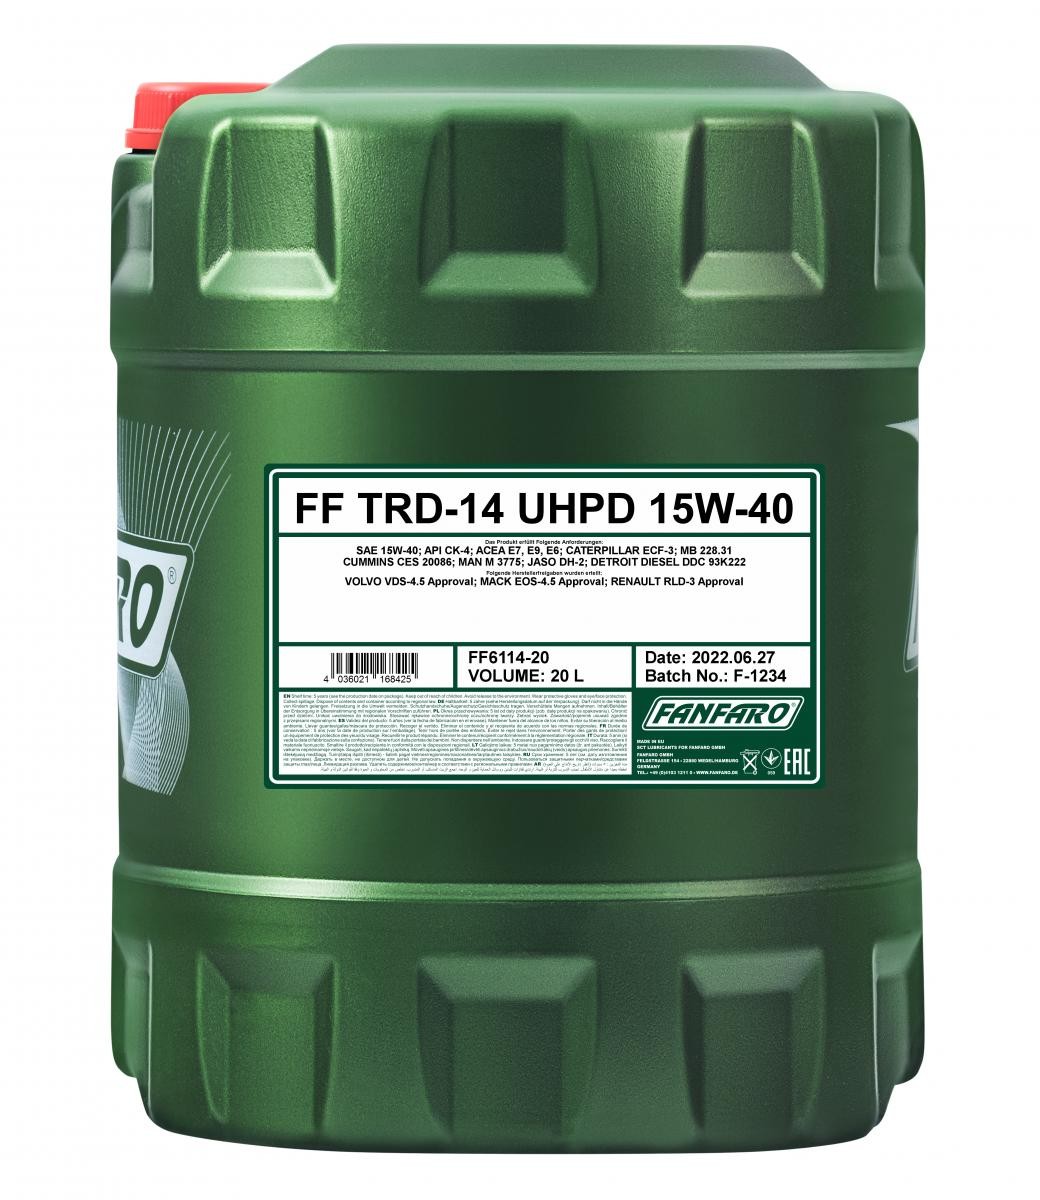 Automobile oil FANFARO 15W-40, 20l, Synthetic Oil longlife FF6114-20